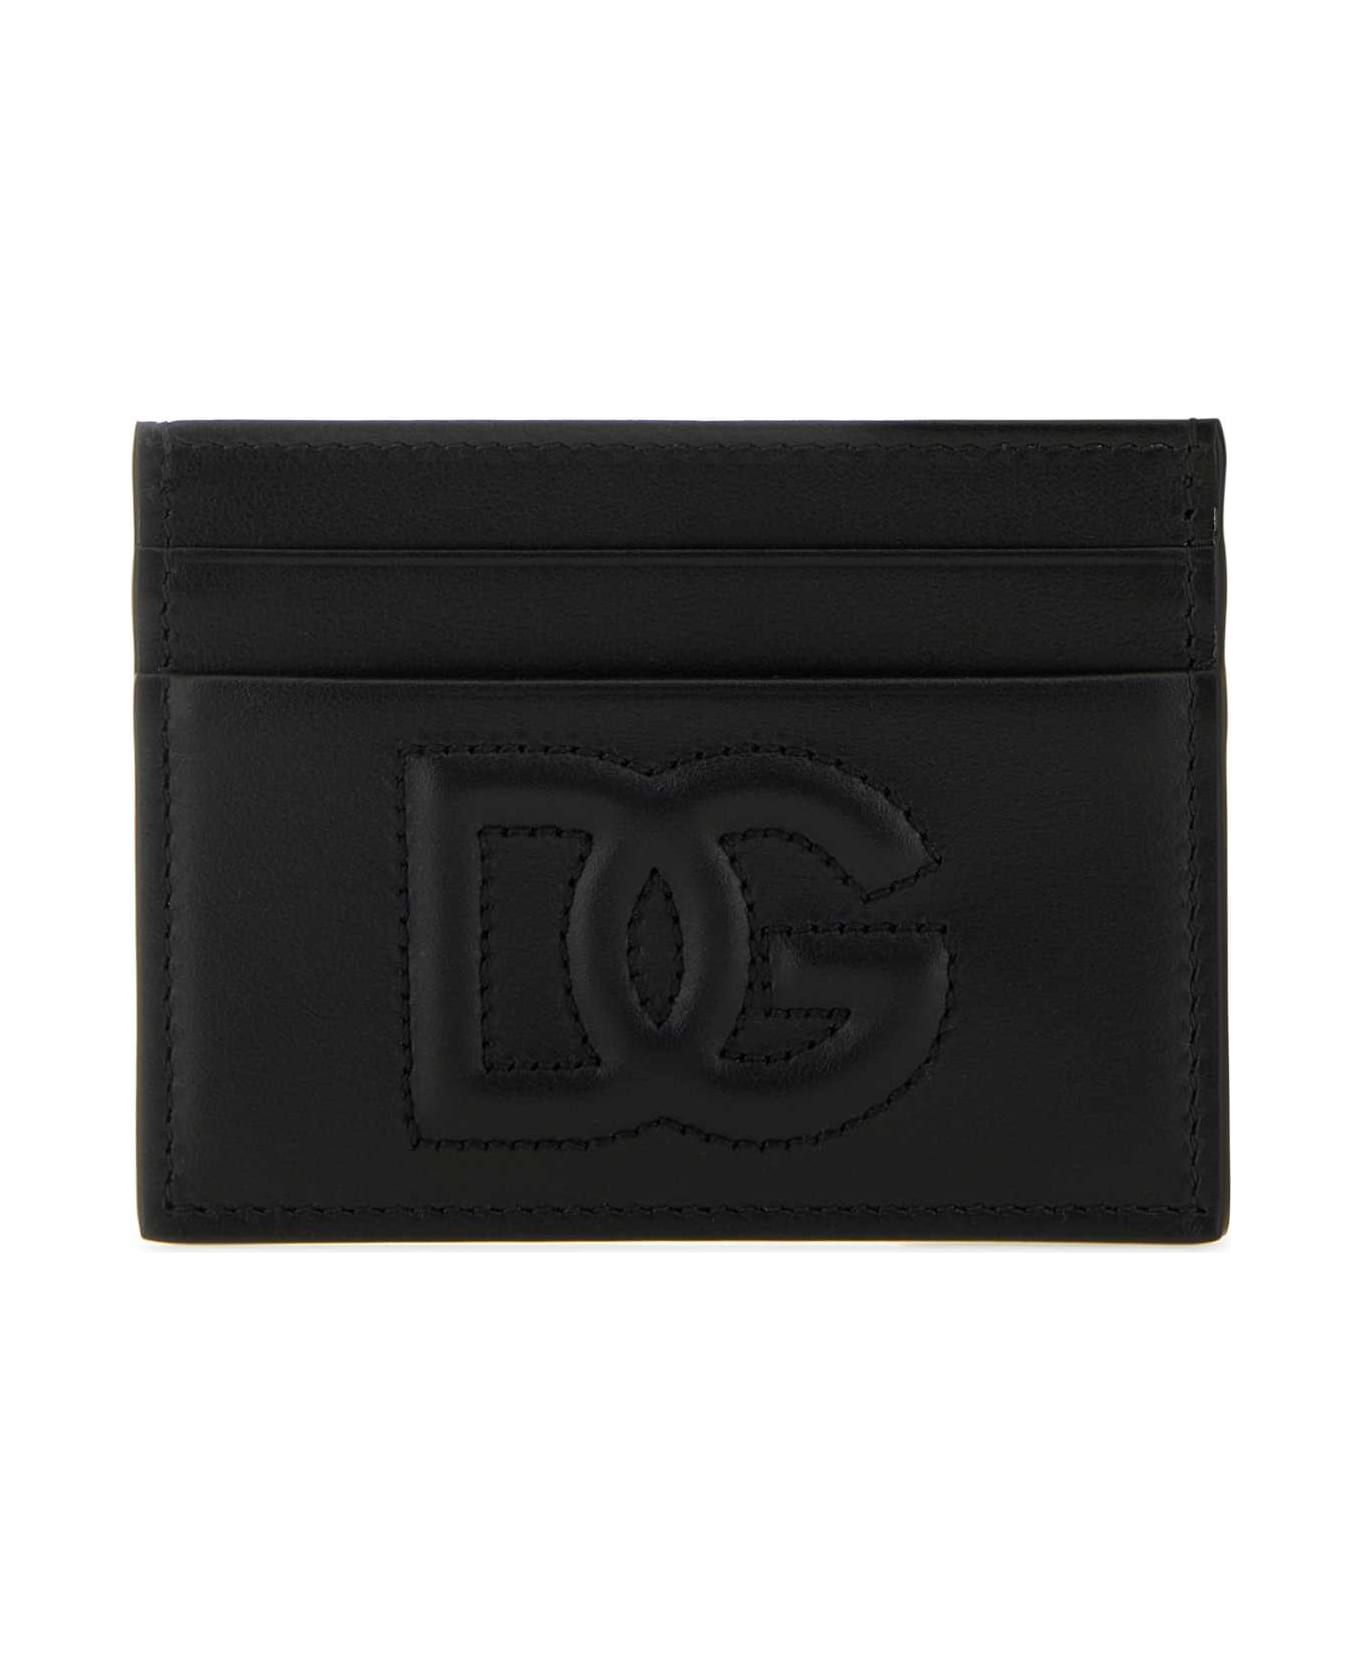 Dolce & Gabbana Black Leather Card Holder - Black